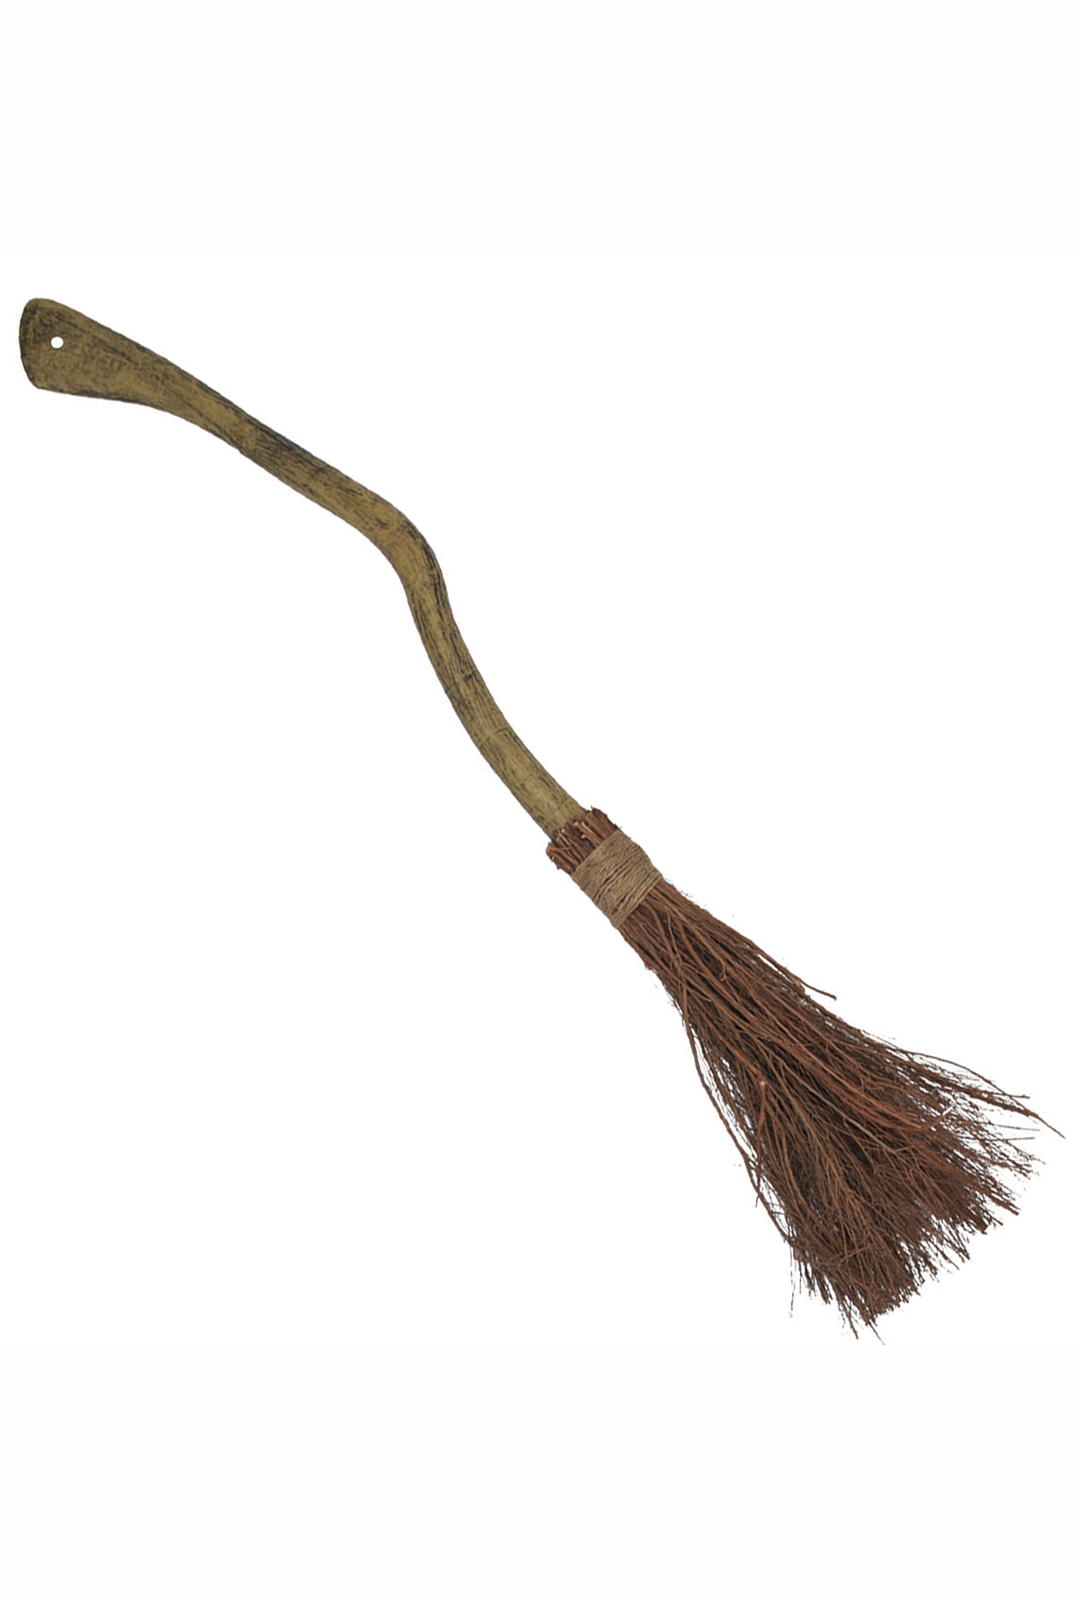 harry potter quidditch broom